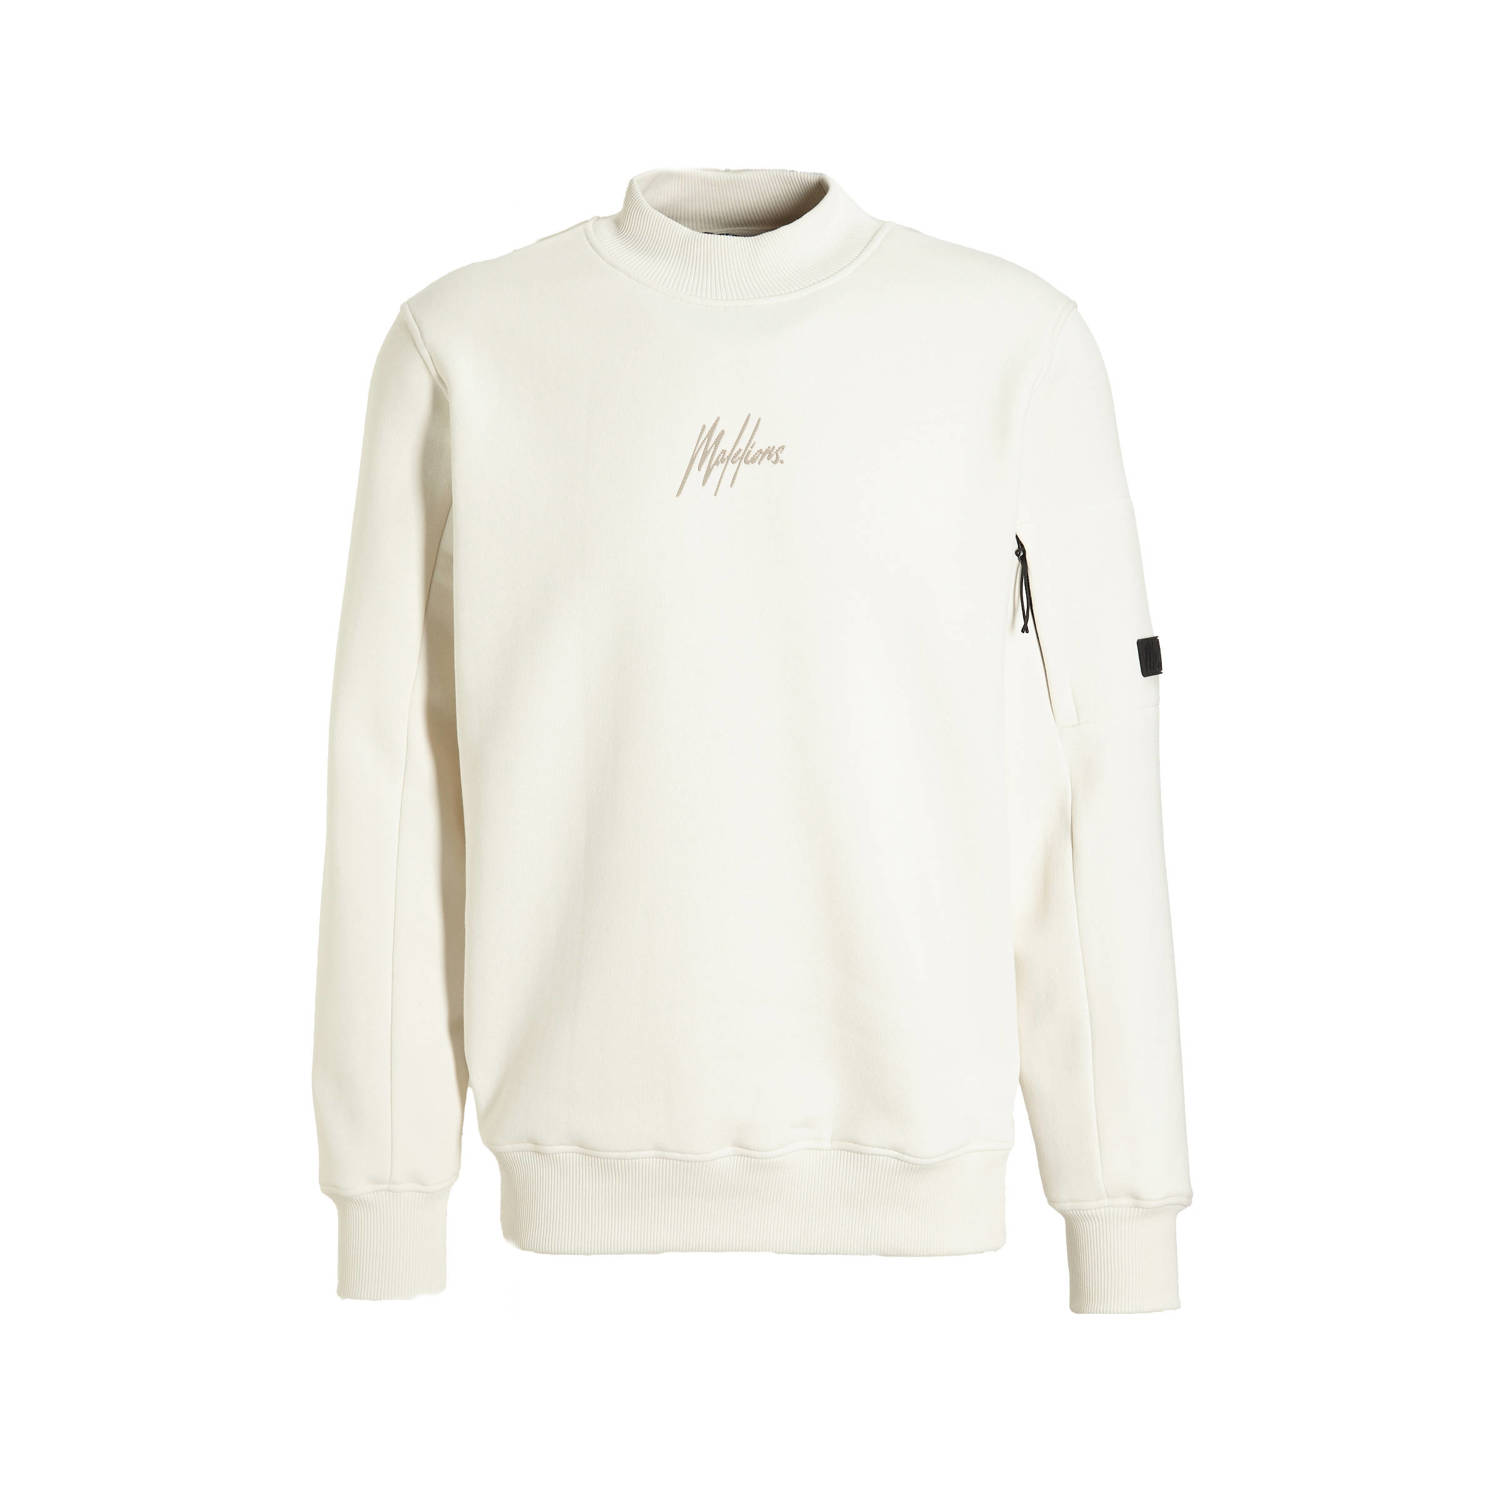 Malelions sweater met logo off-white